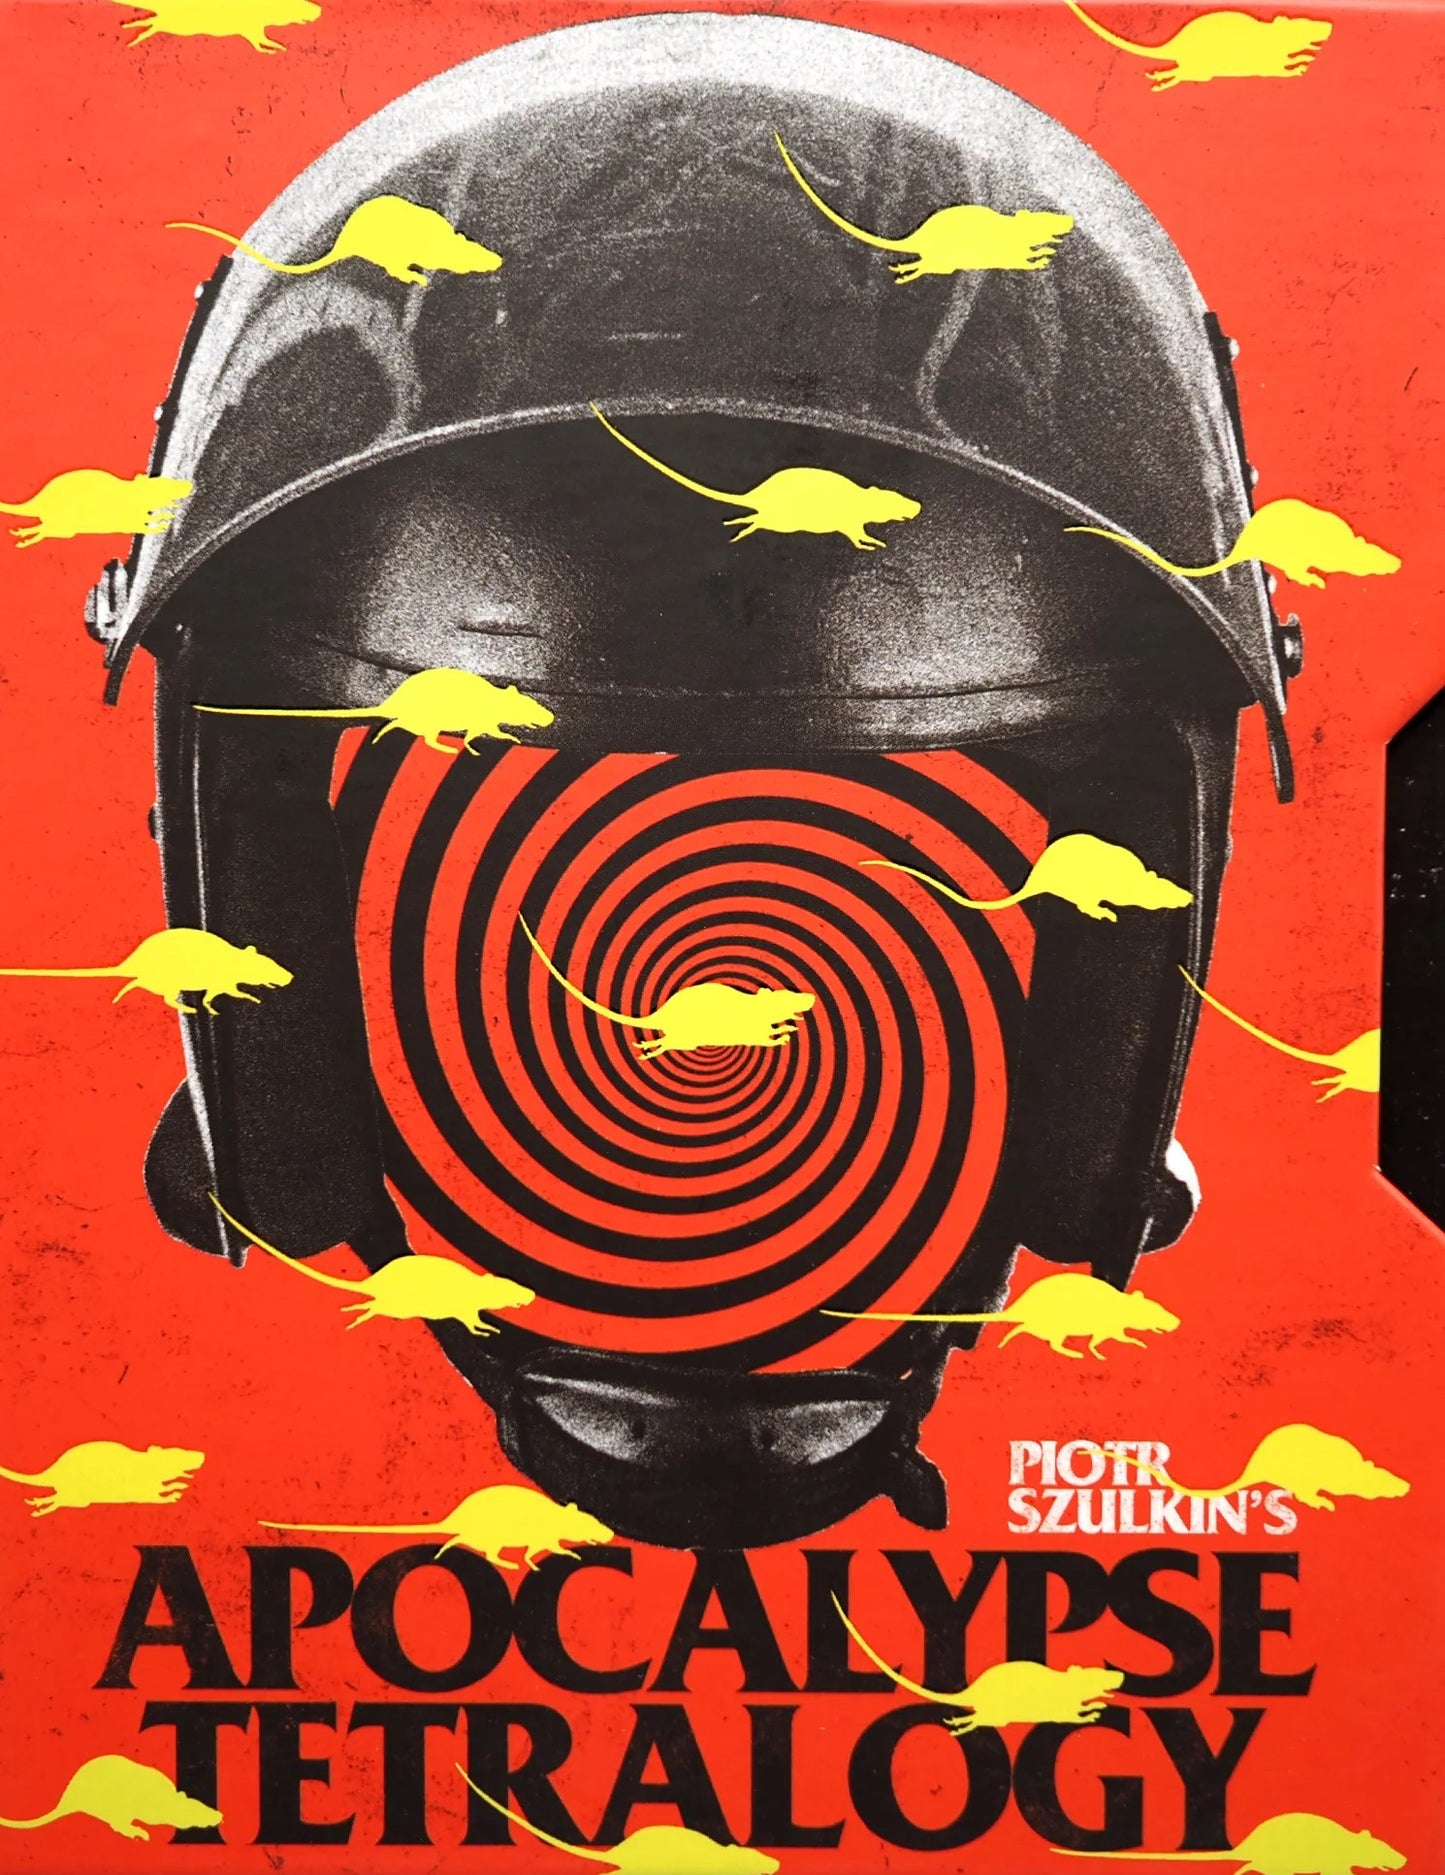 Piotr Szulkin's Apocalypse Tetralogy Limited Edition Vinegar Syndrome Blu-Ray Box Set [NEW] [SLIPCOVER] [DAMAGED]